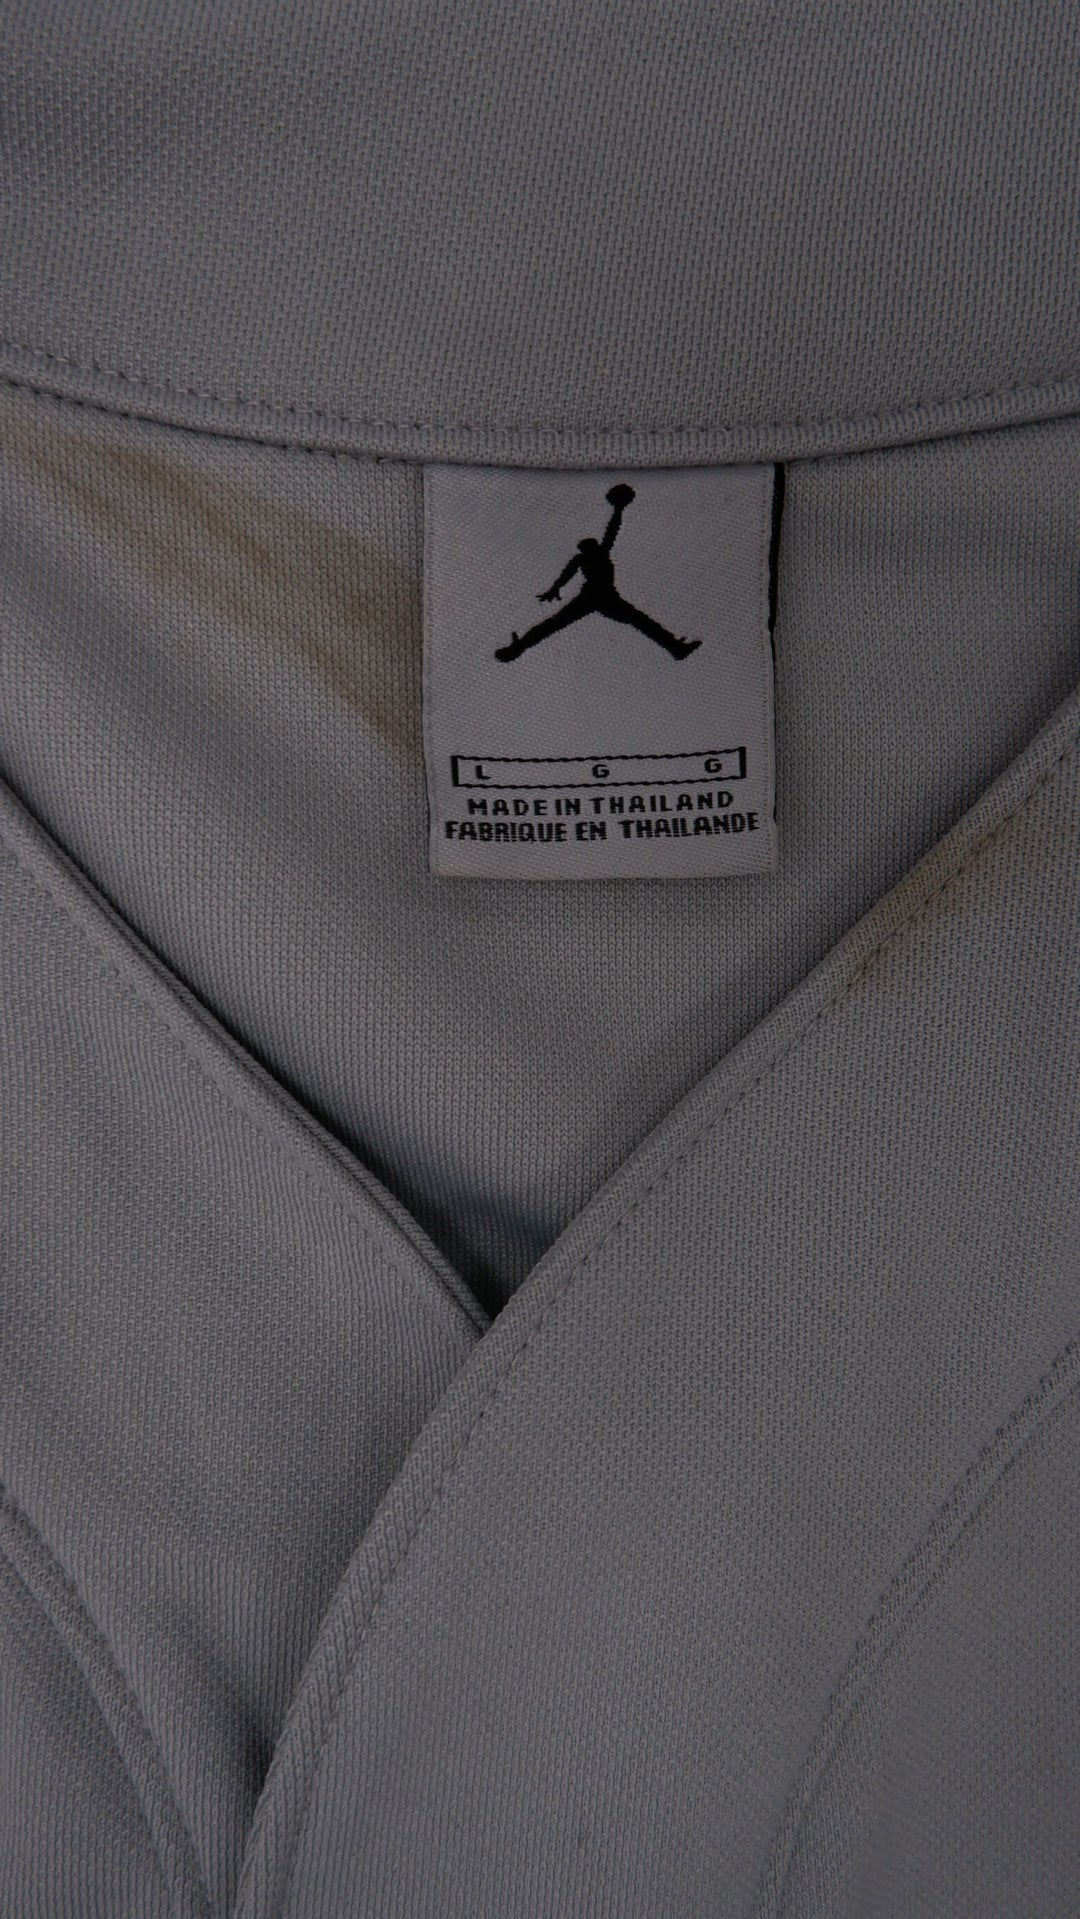 Vintage Jordan # 23 Logo Embroidered Sleeveless Jersey